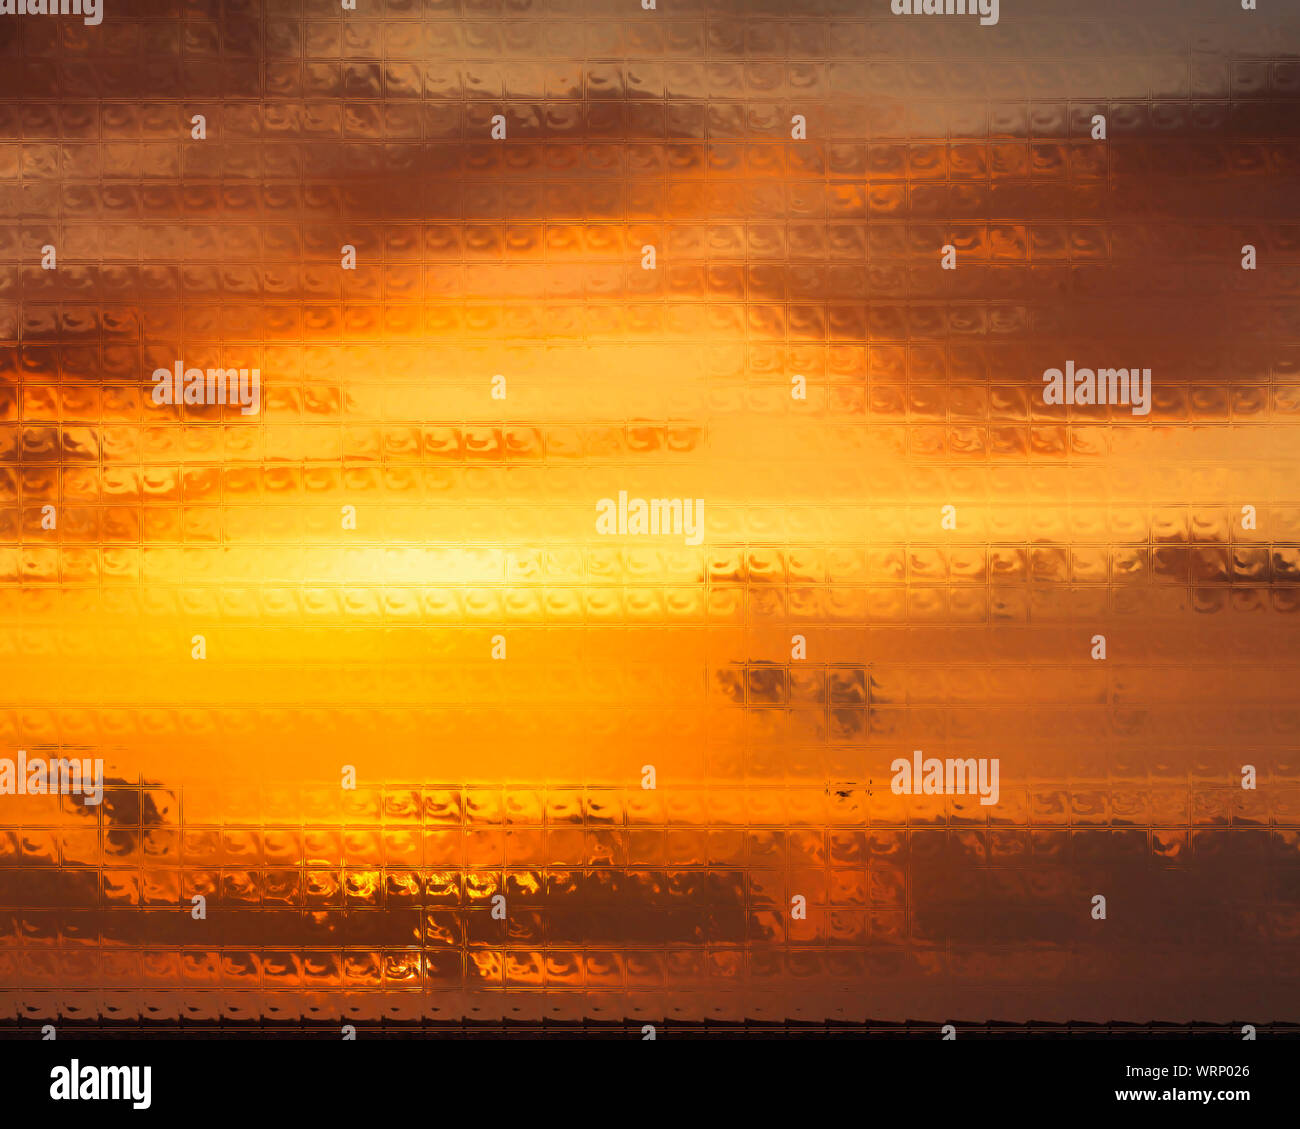 Sonnenuntergang overlay Hintergrund Textur wallpaper screensaver Design Stockfoto